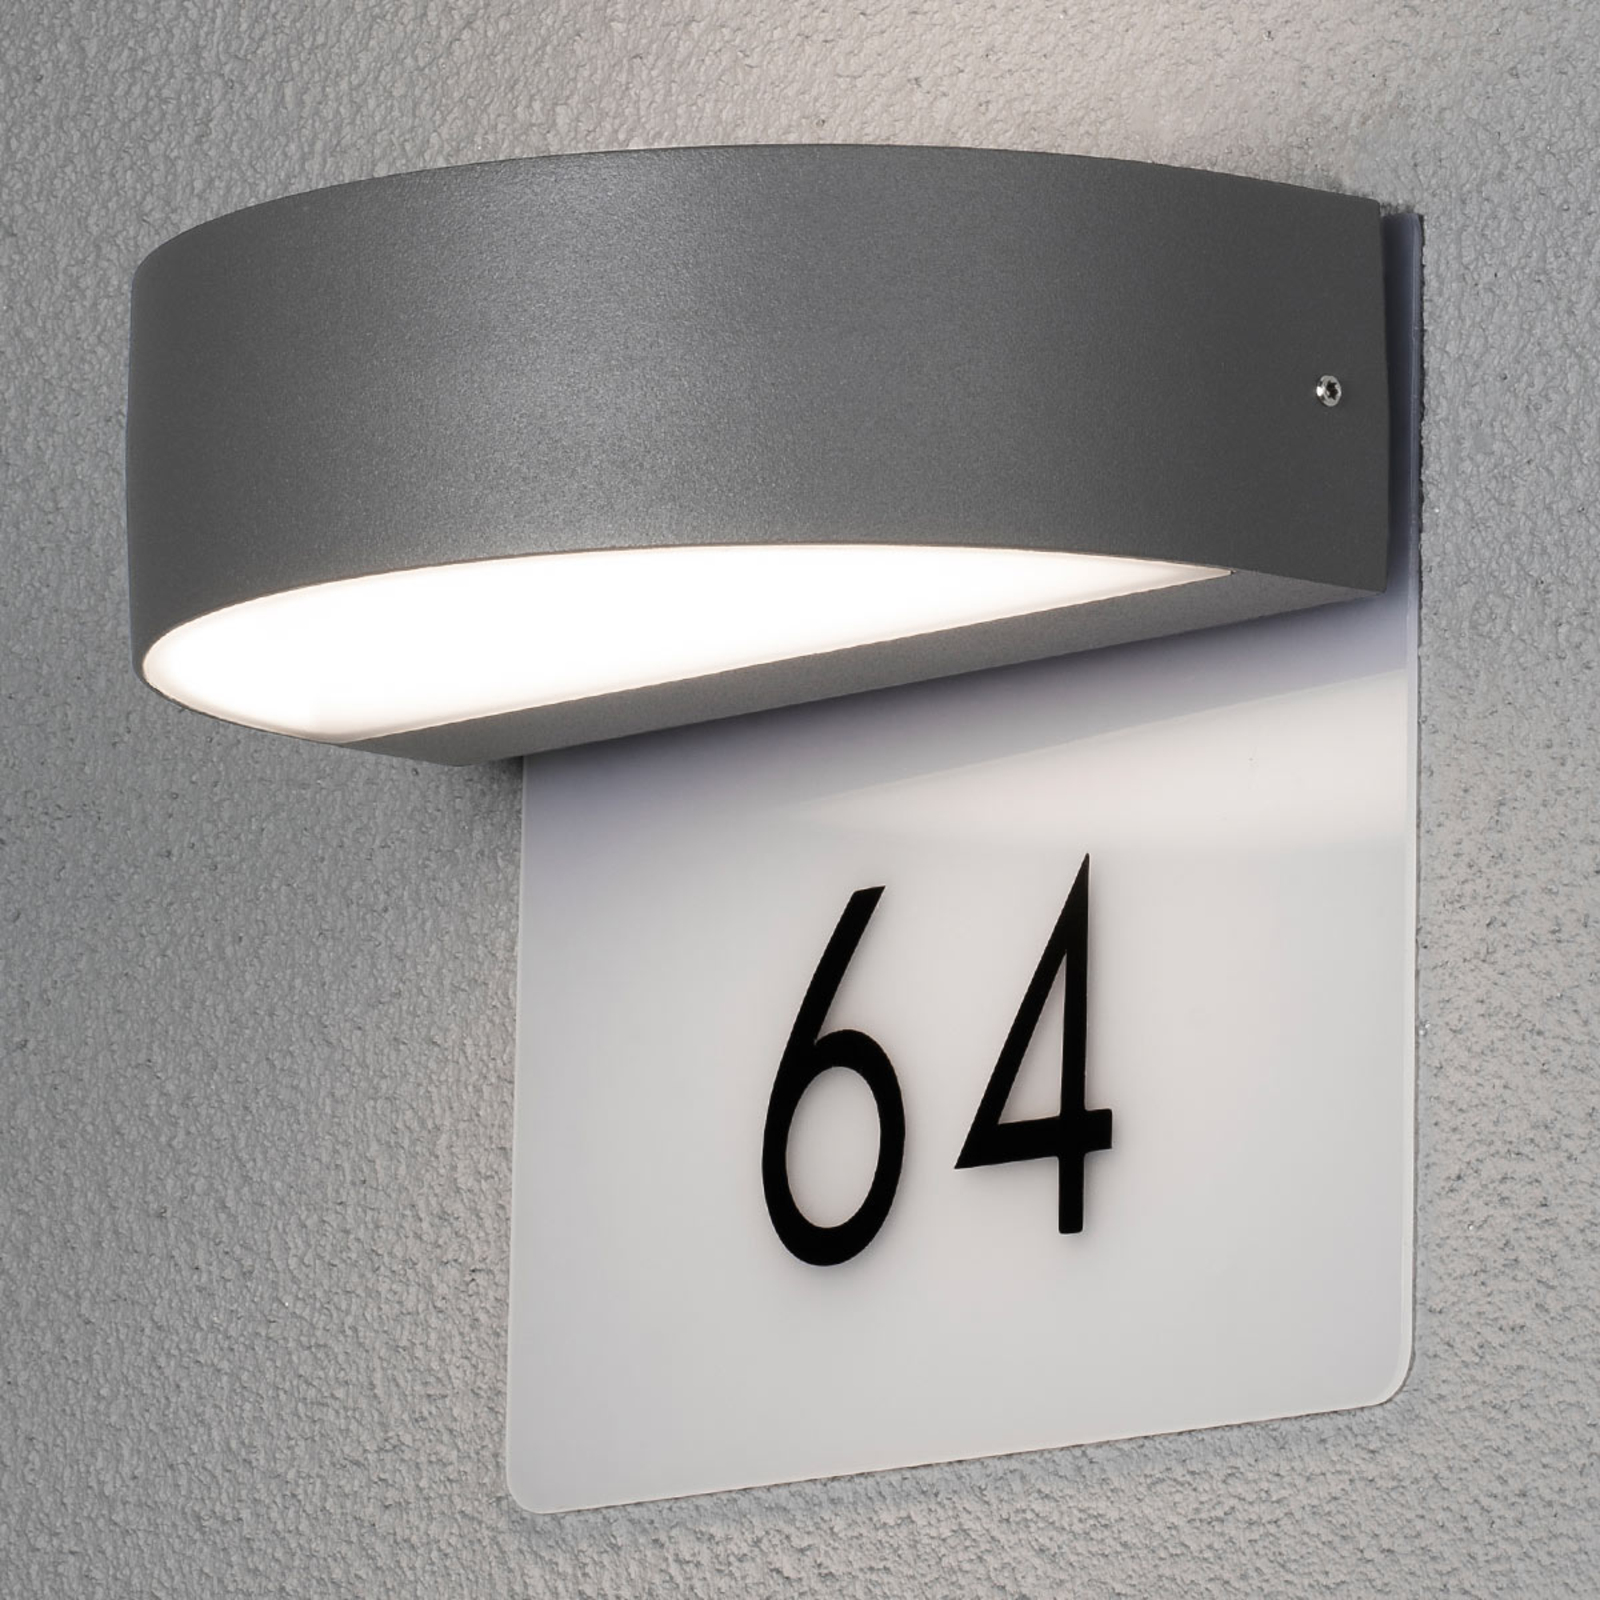 Moderna lampada LED num. civici Monza incl. cifre